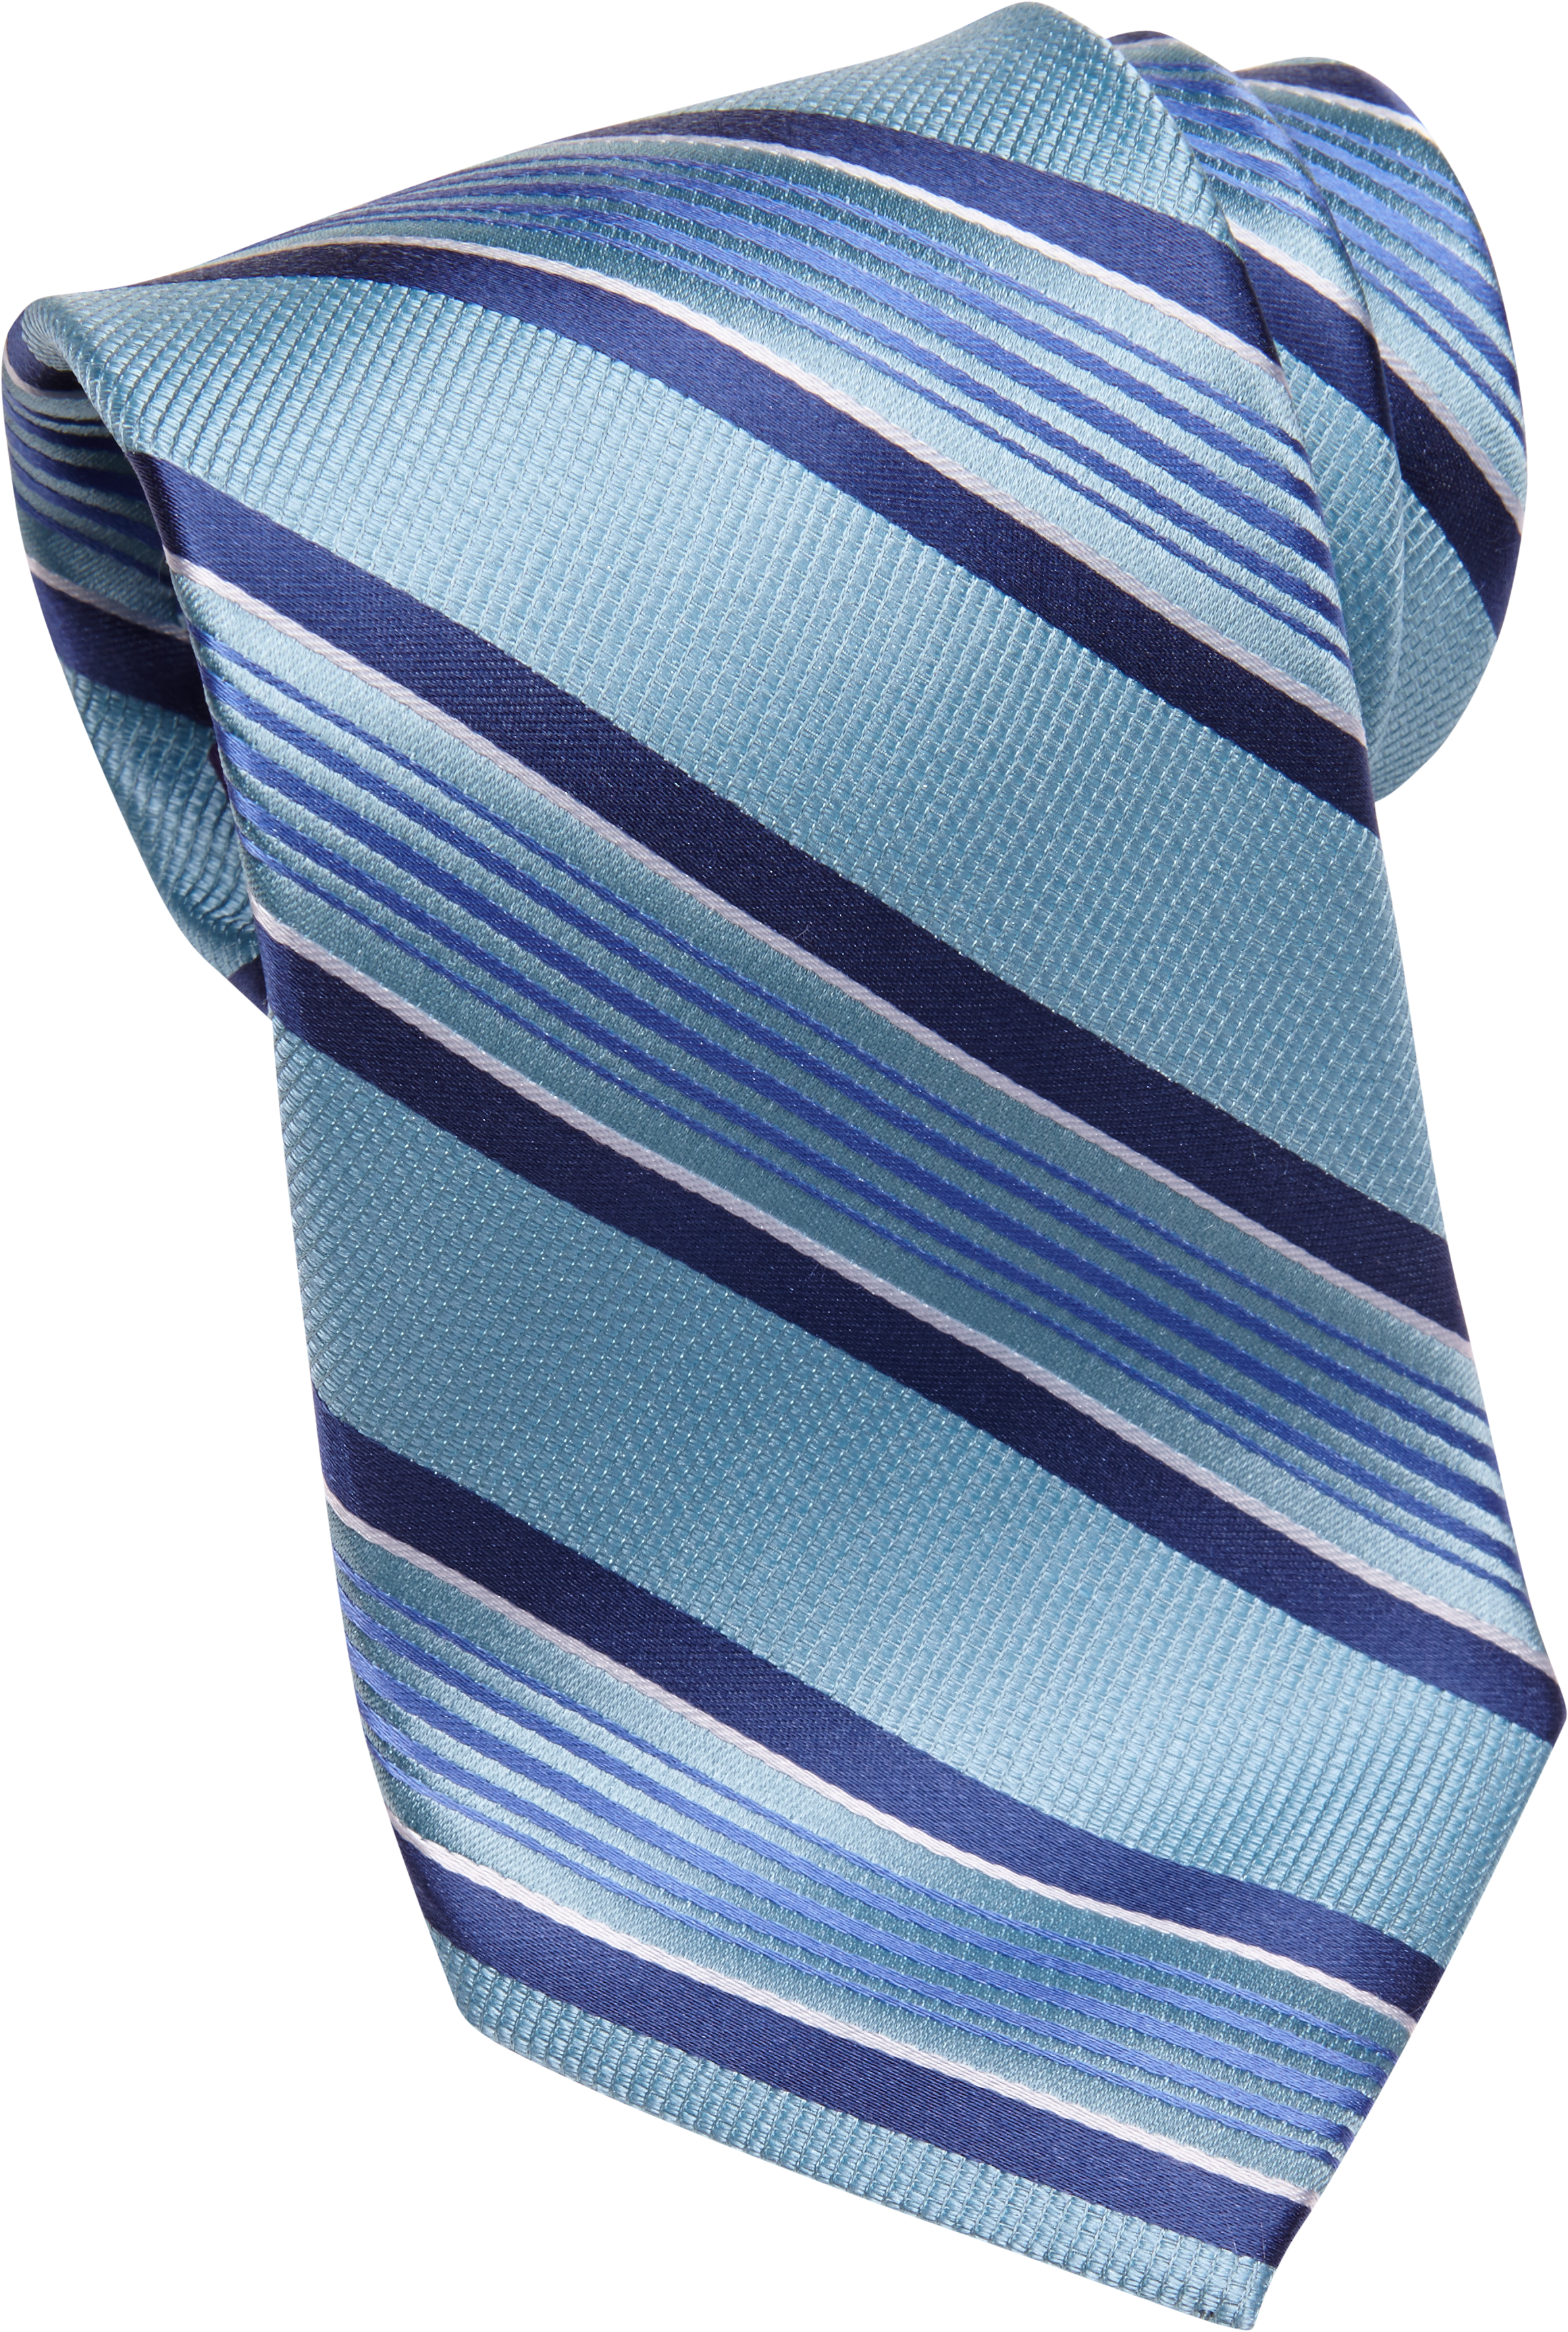 Burma Bibas Aqua Striped Tie - Men's | Men's Wearhouse